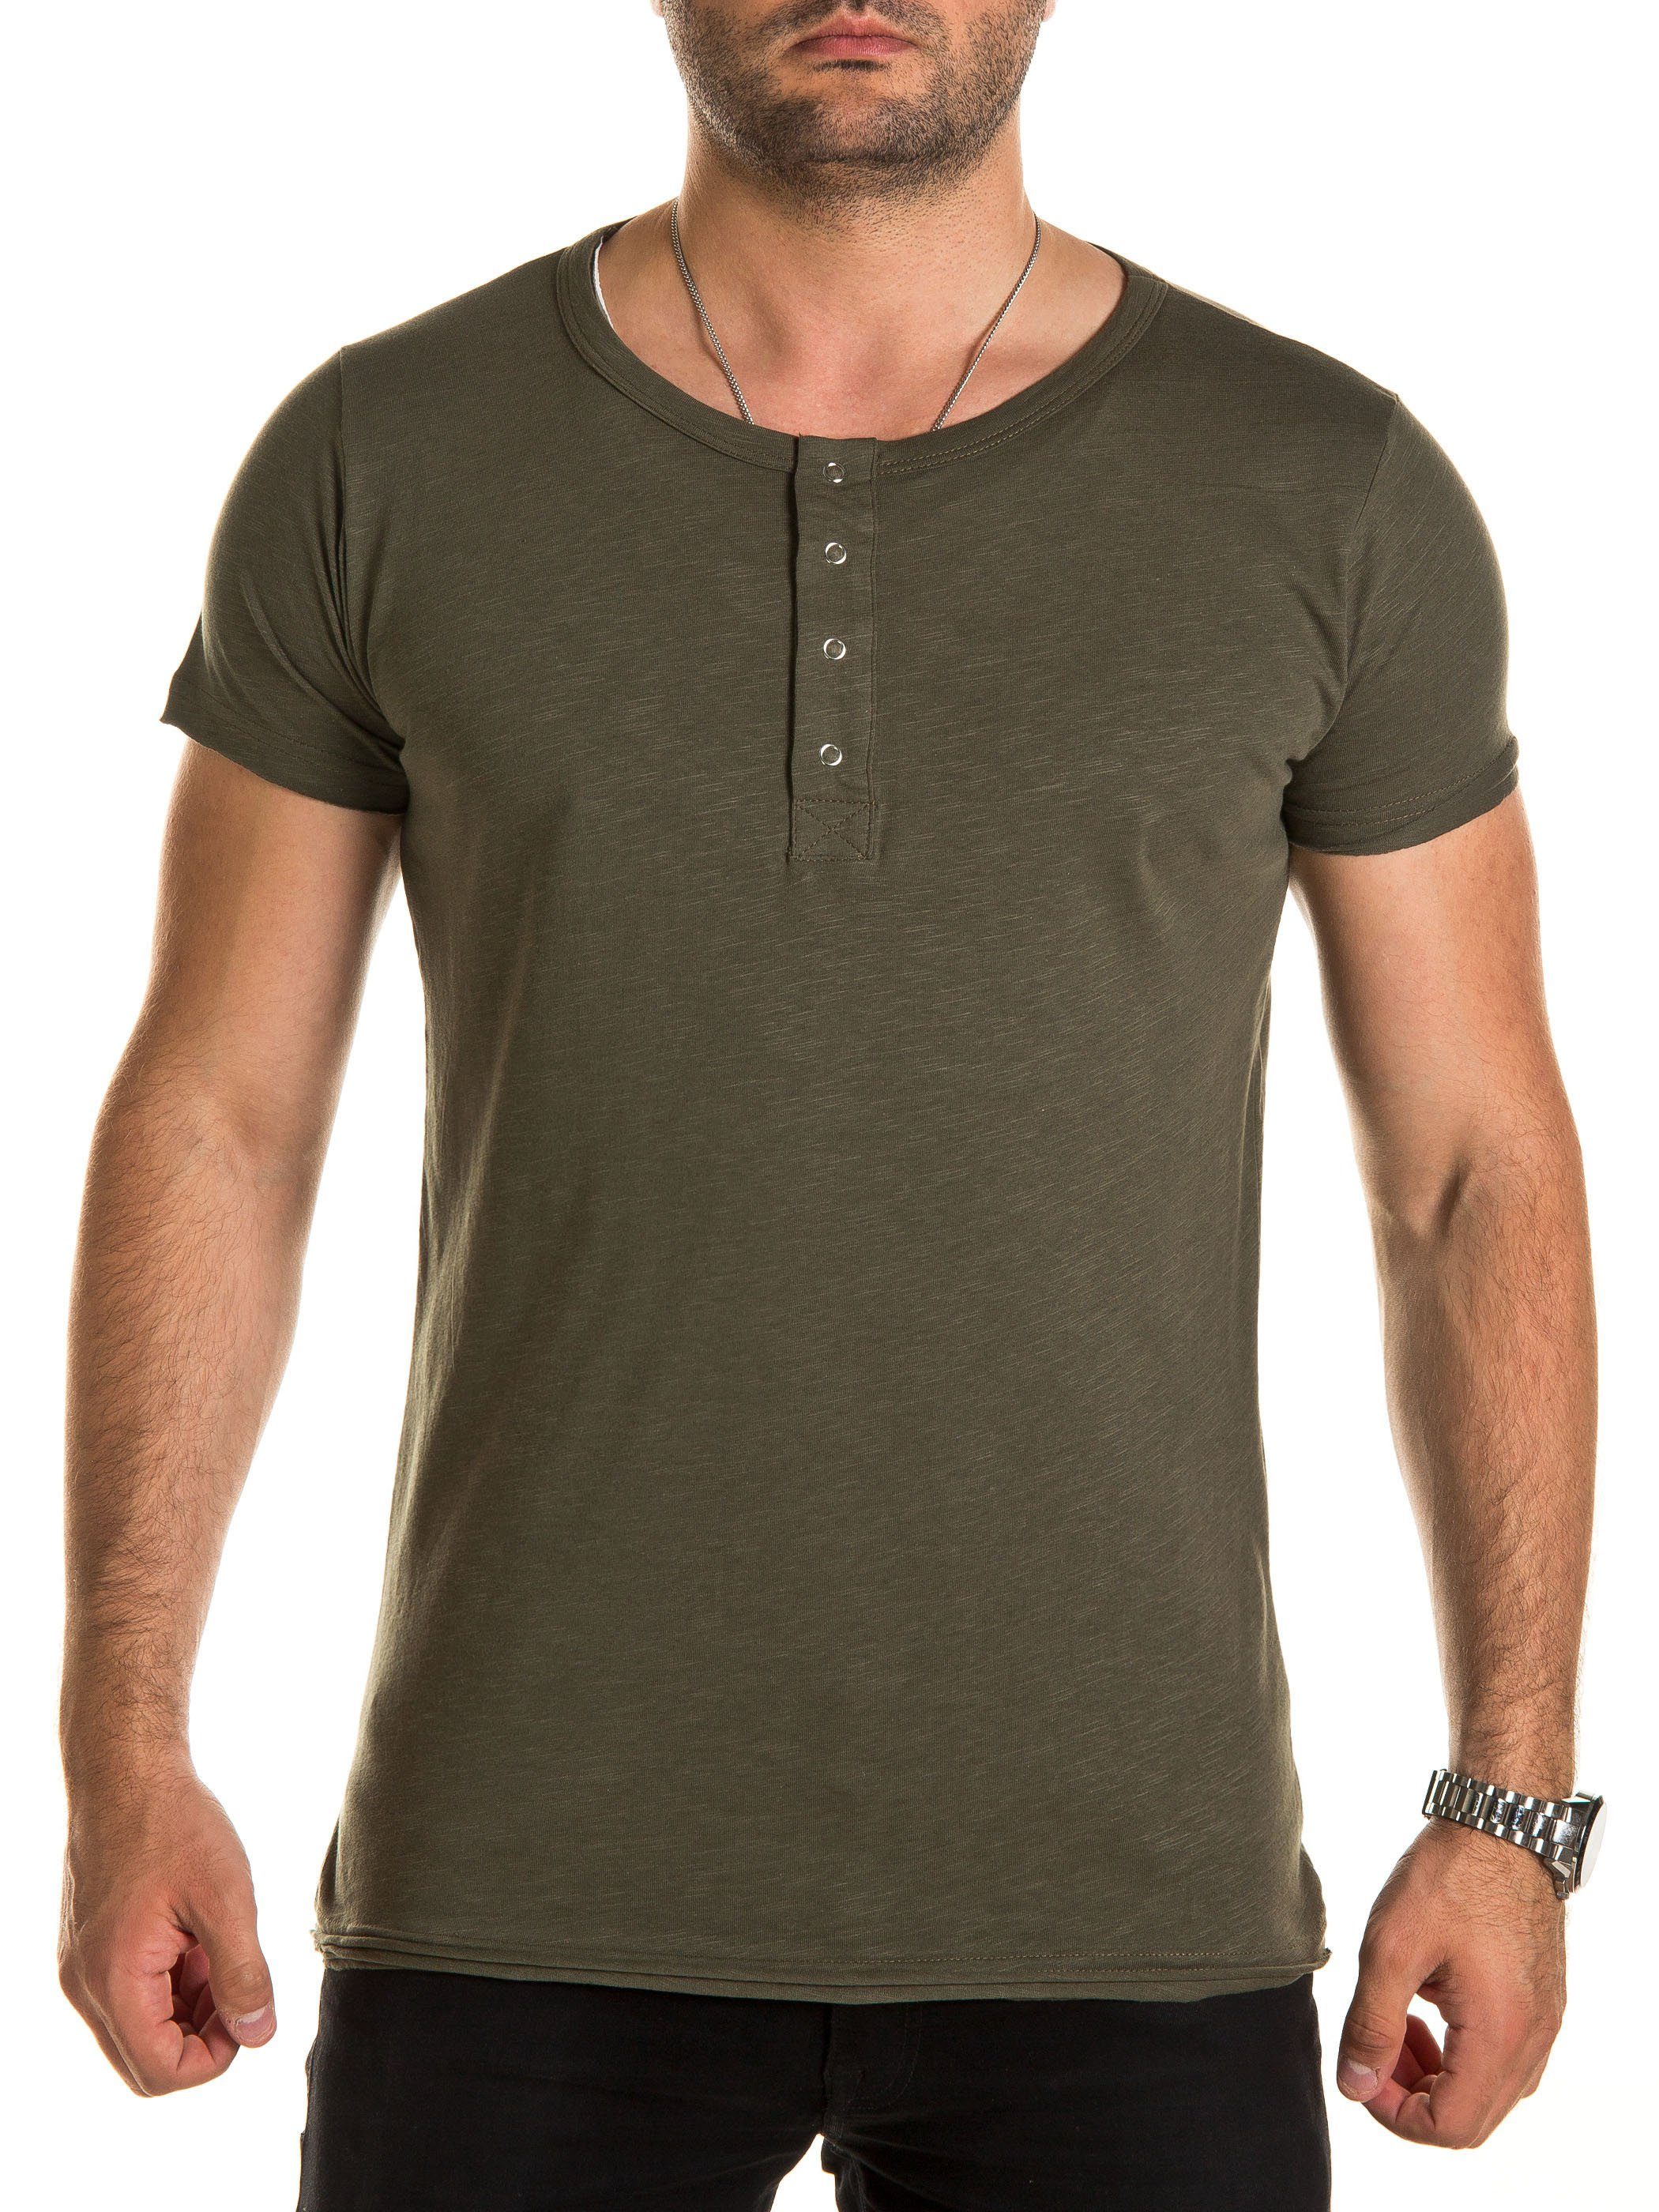 WOTEGA T-Shirt V-Neck Layer Pete 190511) (grape (Packung) T-Shirt Double V-Neck leaf Double Pete T-Shirt Layer Grau